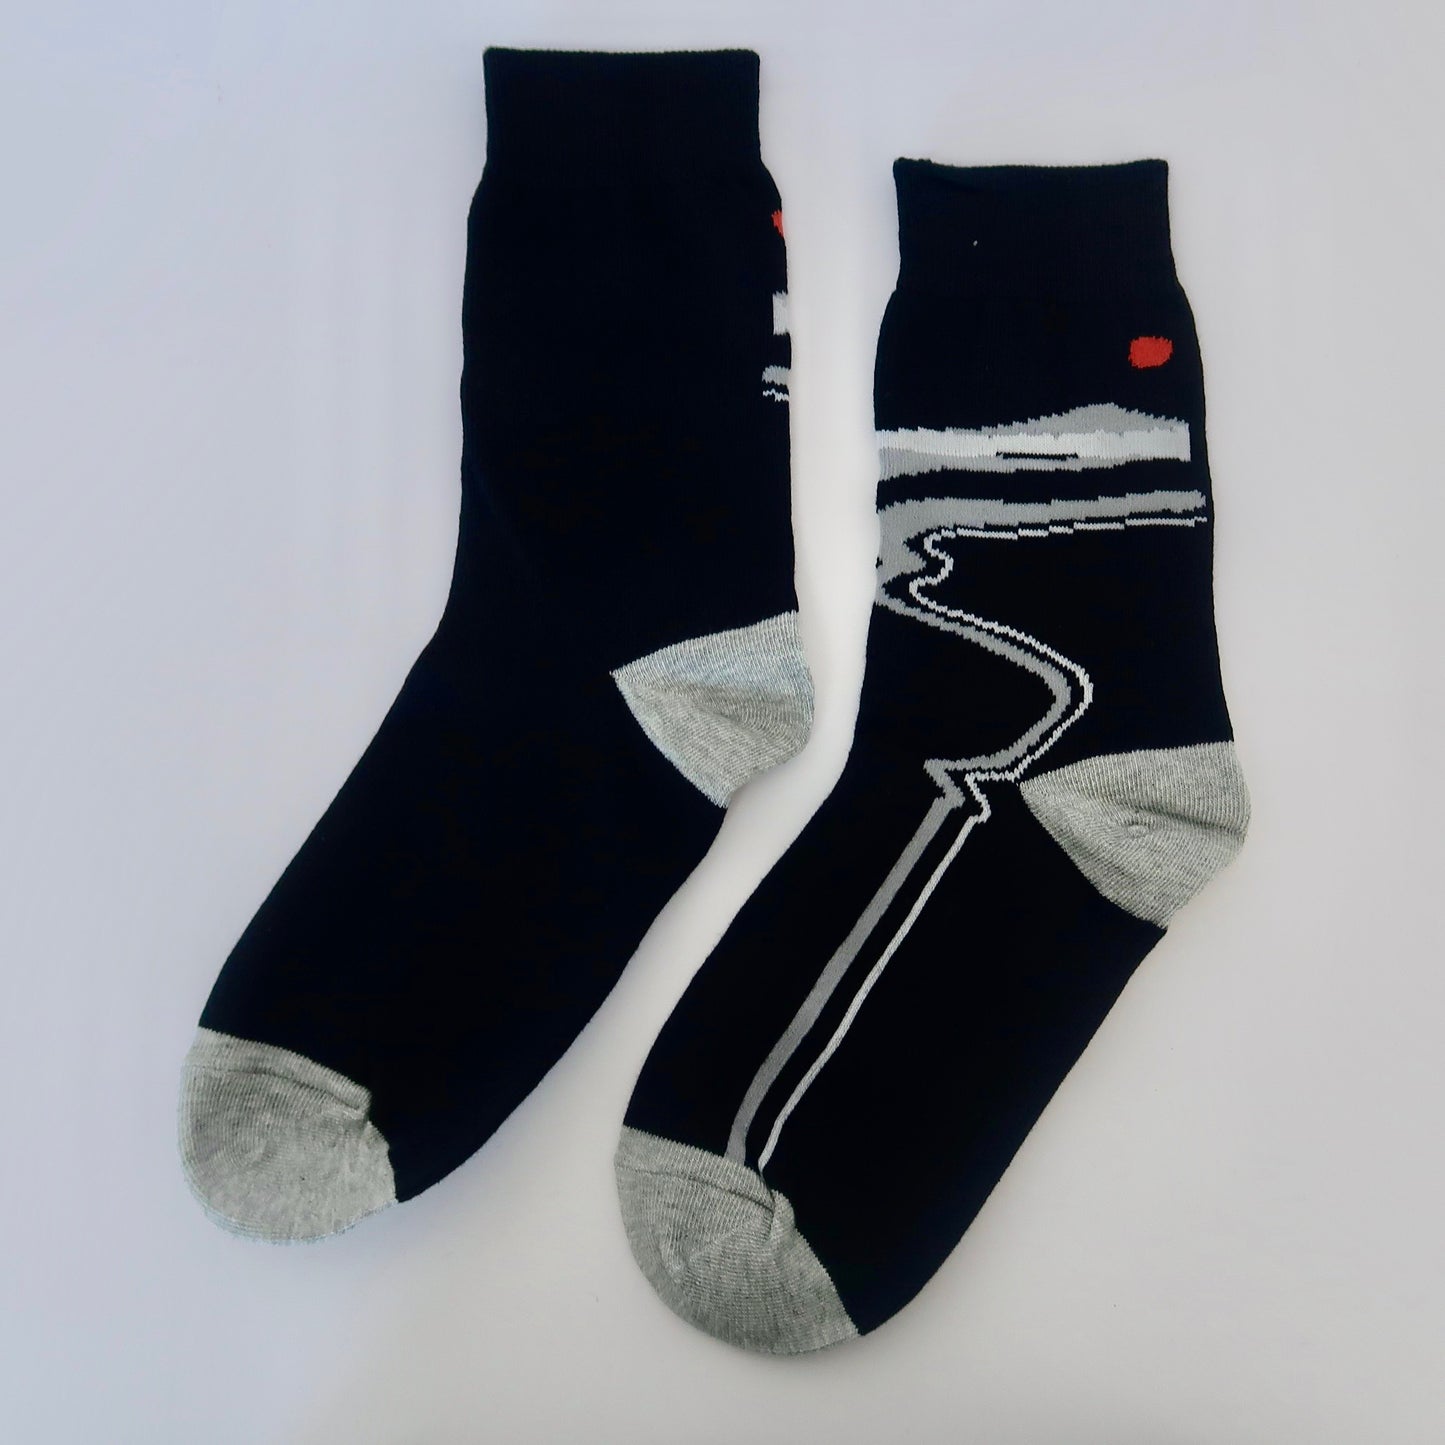 Long Road Abstract Adult Socks